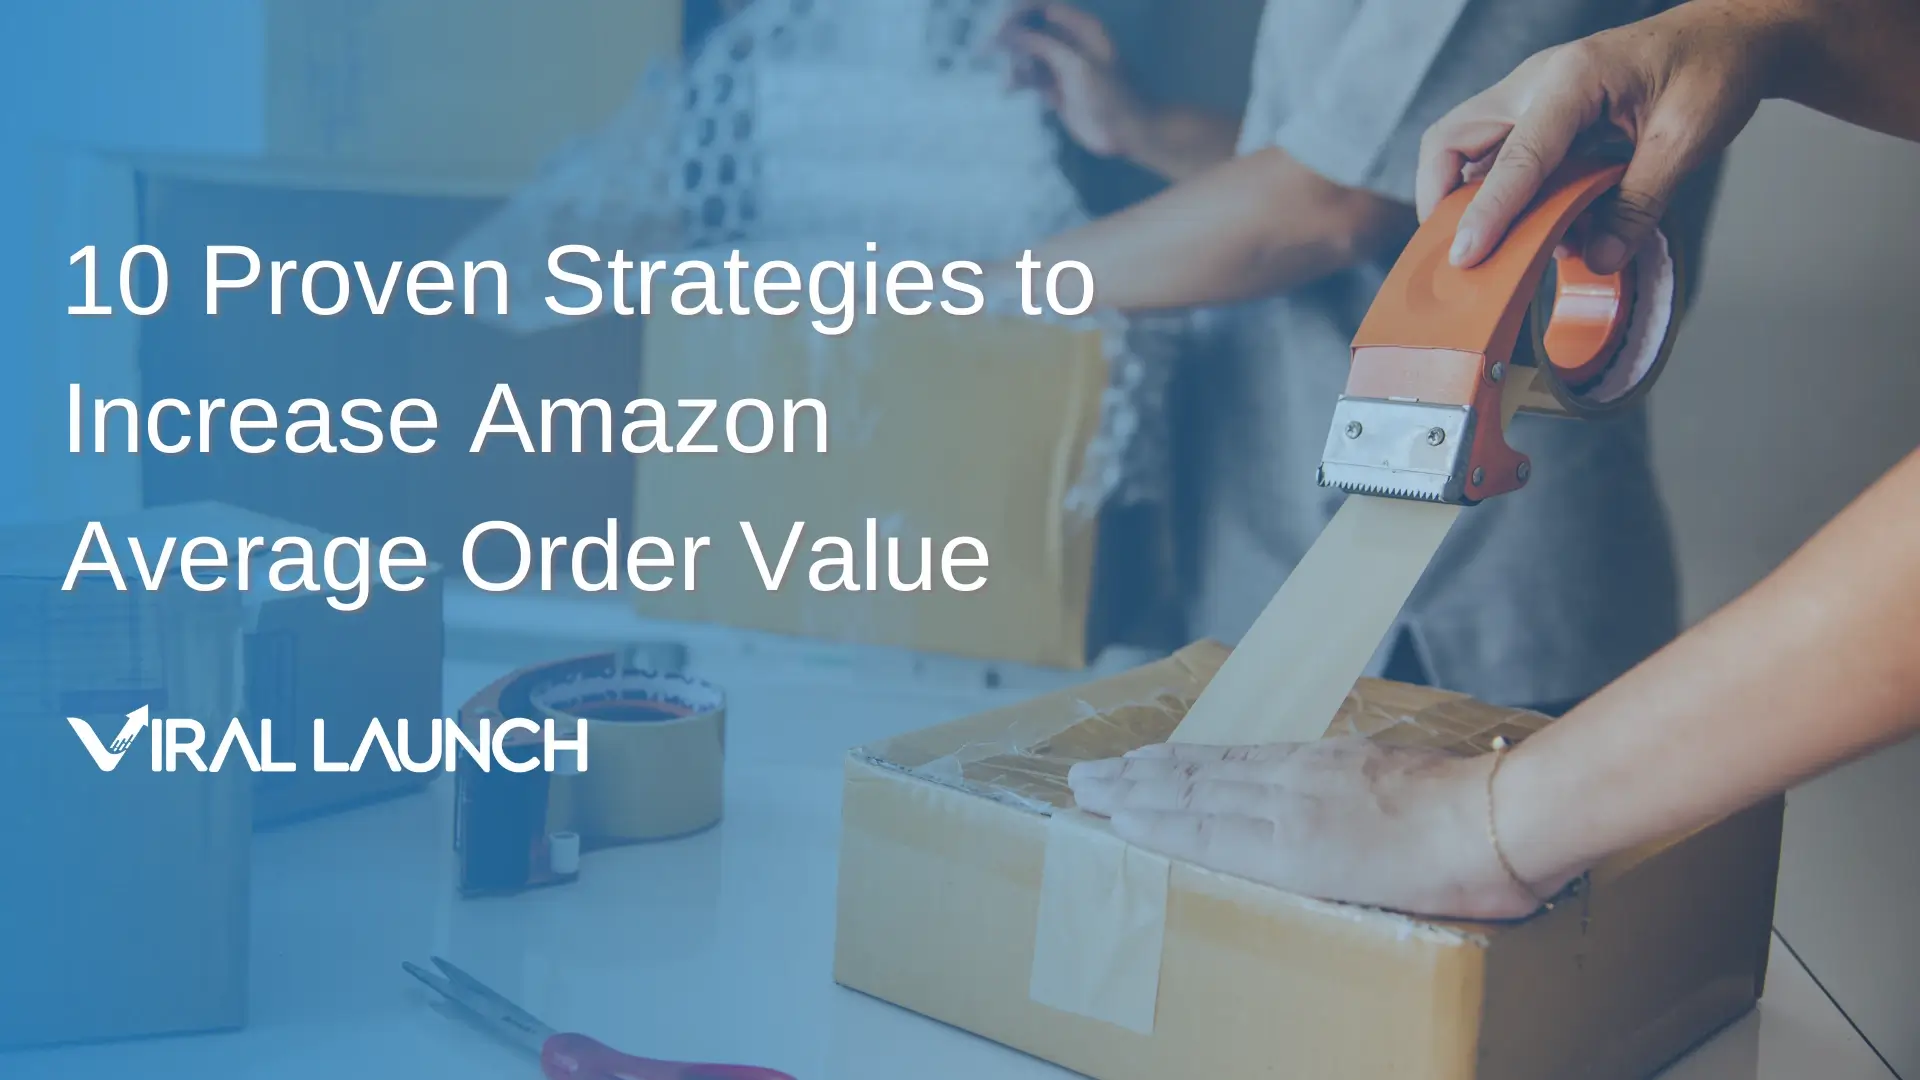 10 Proven strategies to increase Amazon average order value.